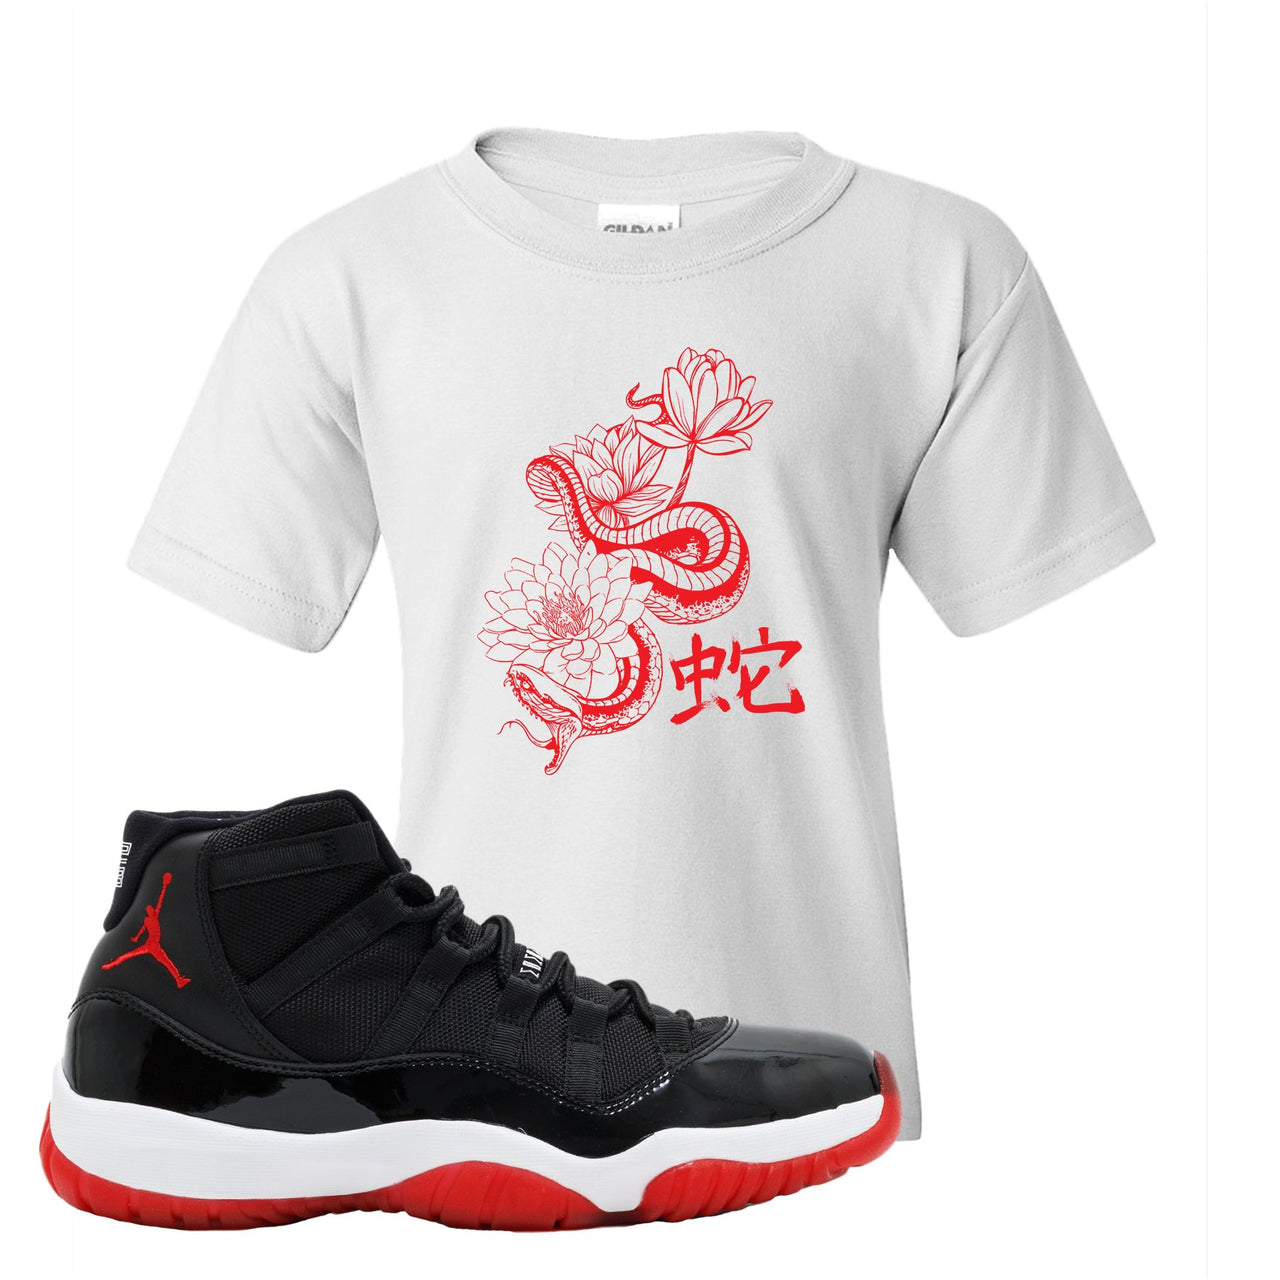 Jordan 11 Bred Snake Lotus White Sneaker Hook Up Kid's T-Shirt